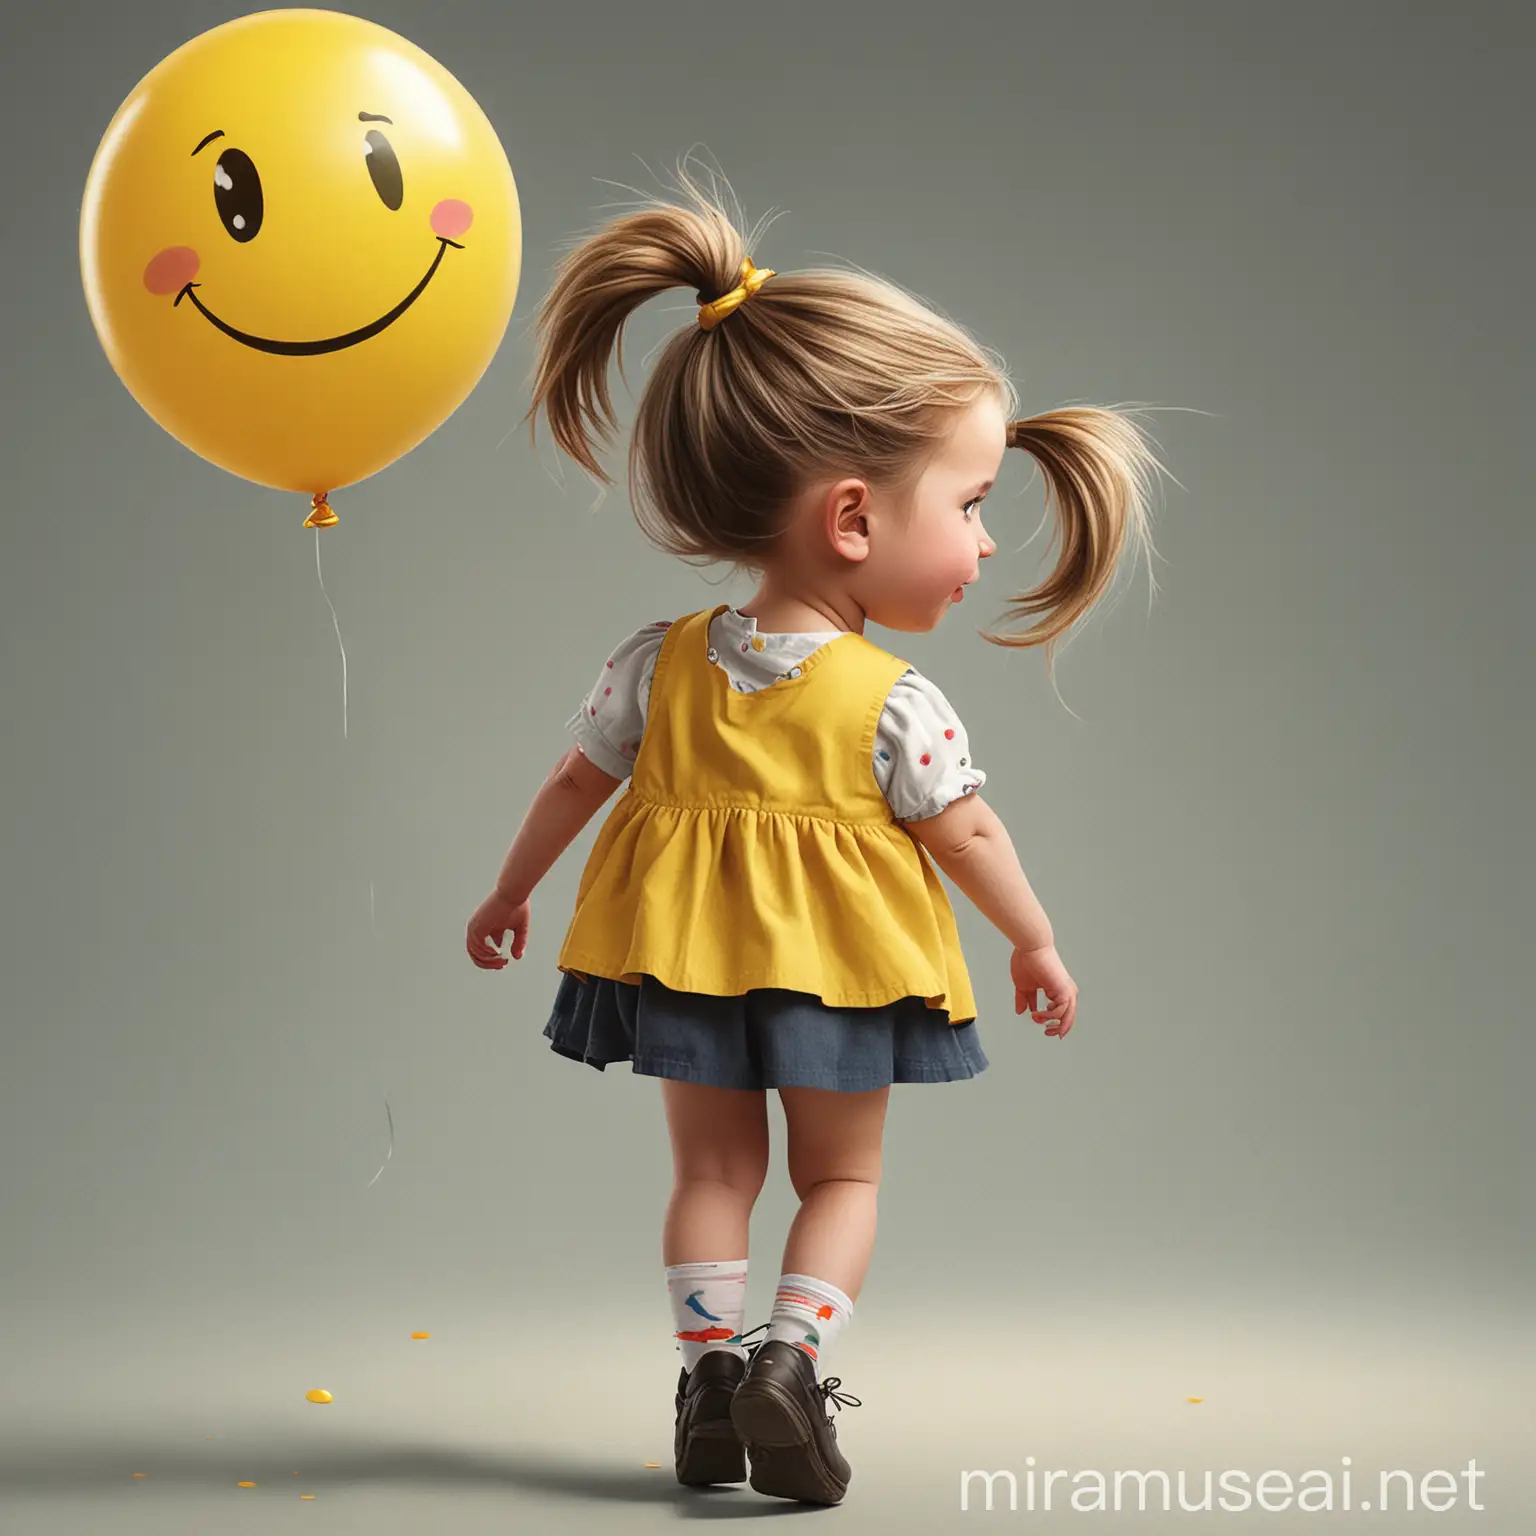 Cheerful Little Girl with Yellow Smiley Balloon